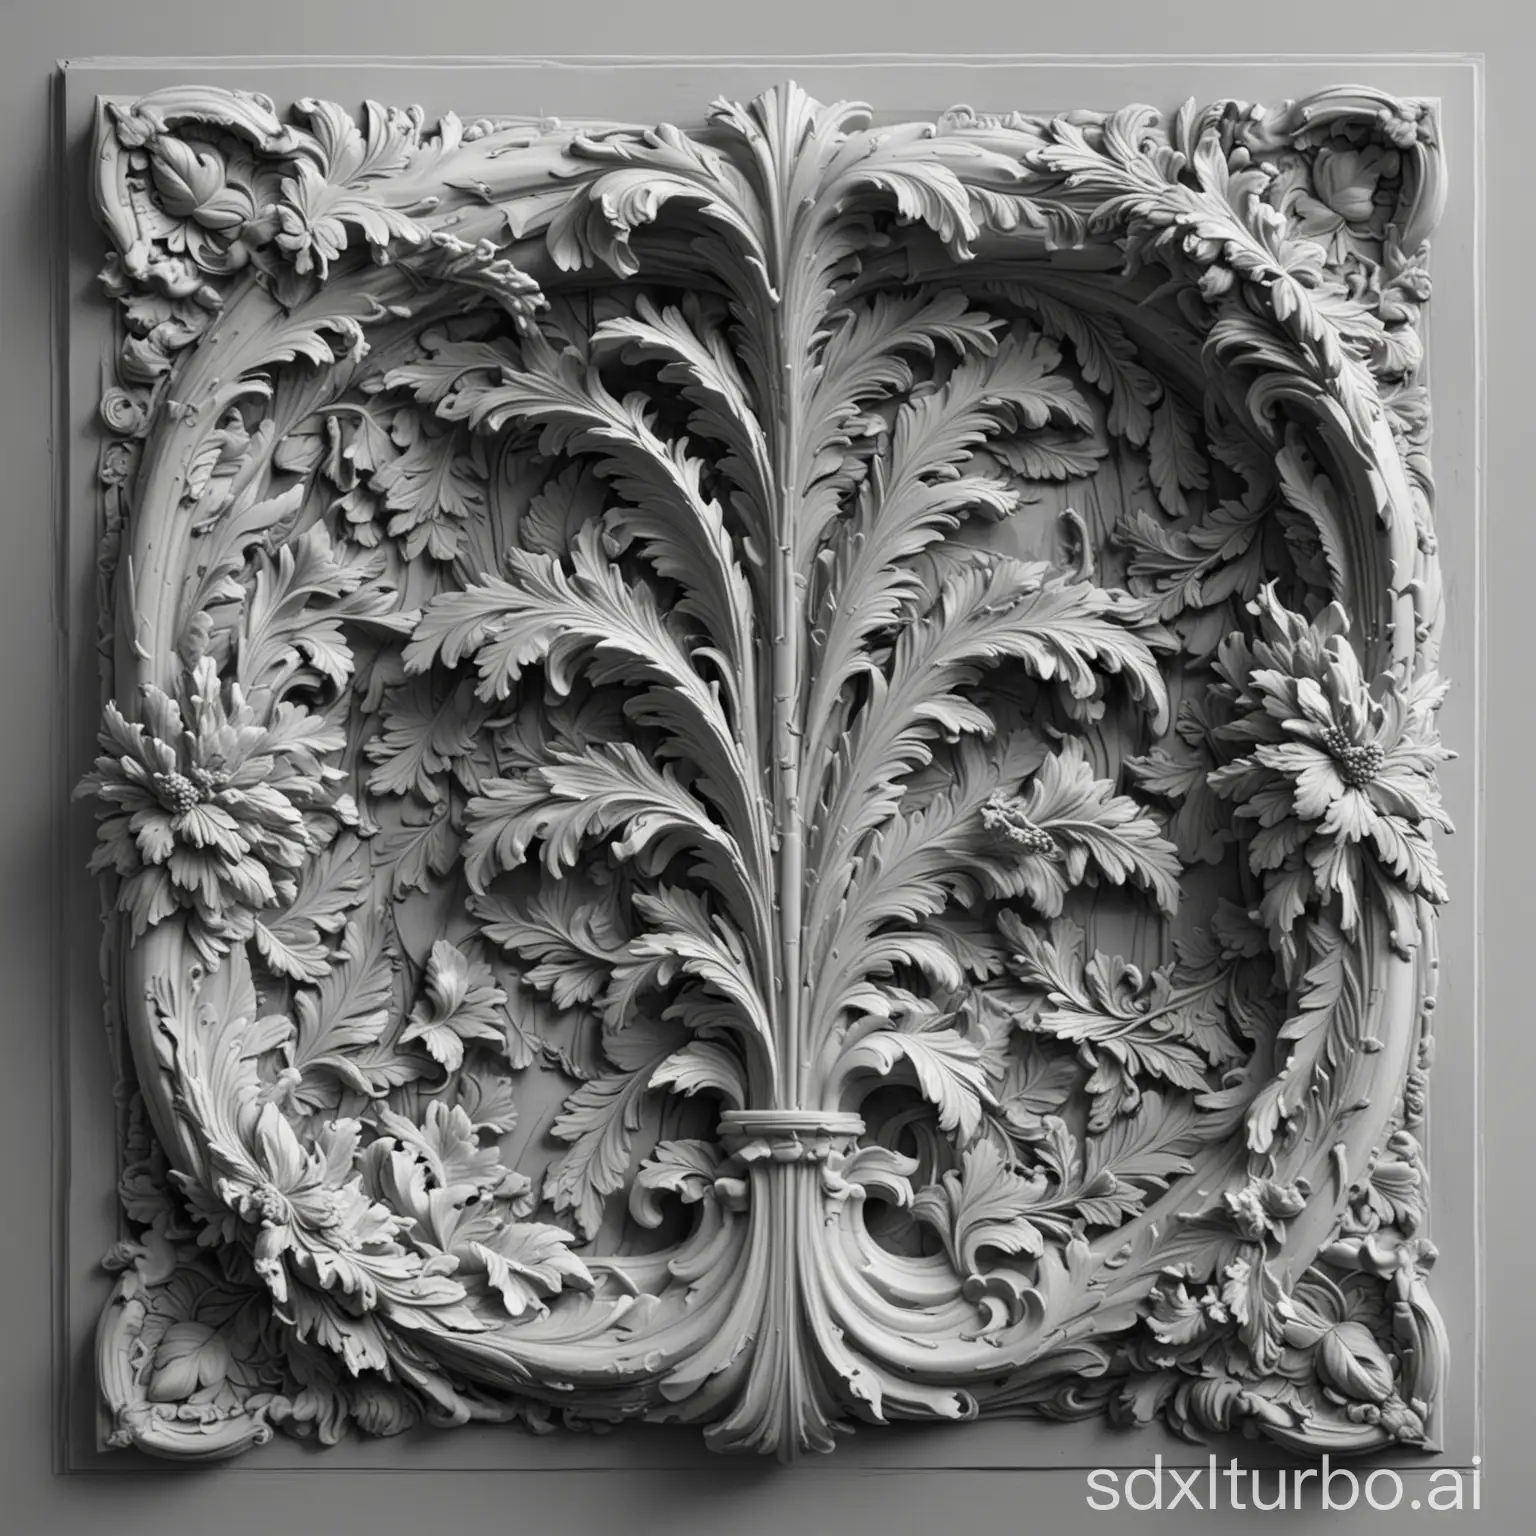 thin frame, acanthus, grayscale, depthmap, reliefs, sculpture, basrelief